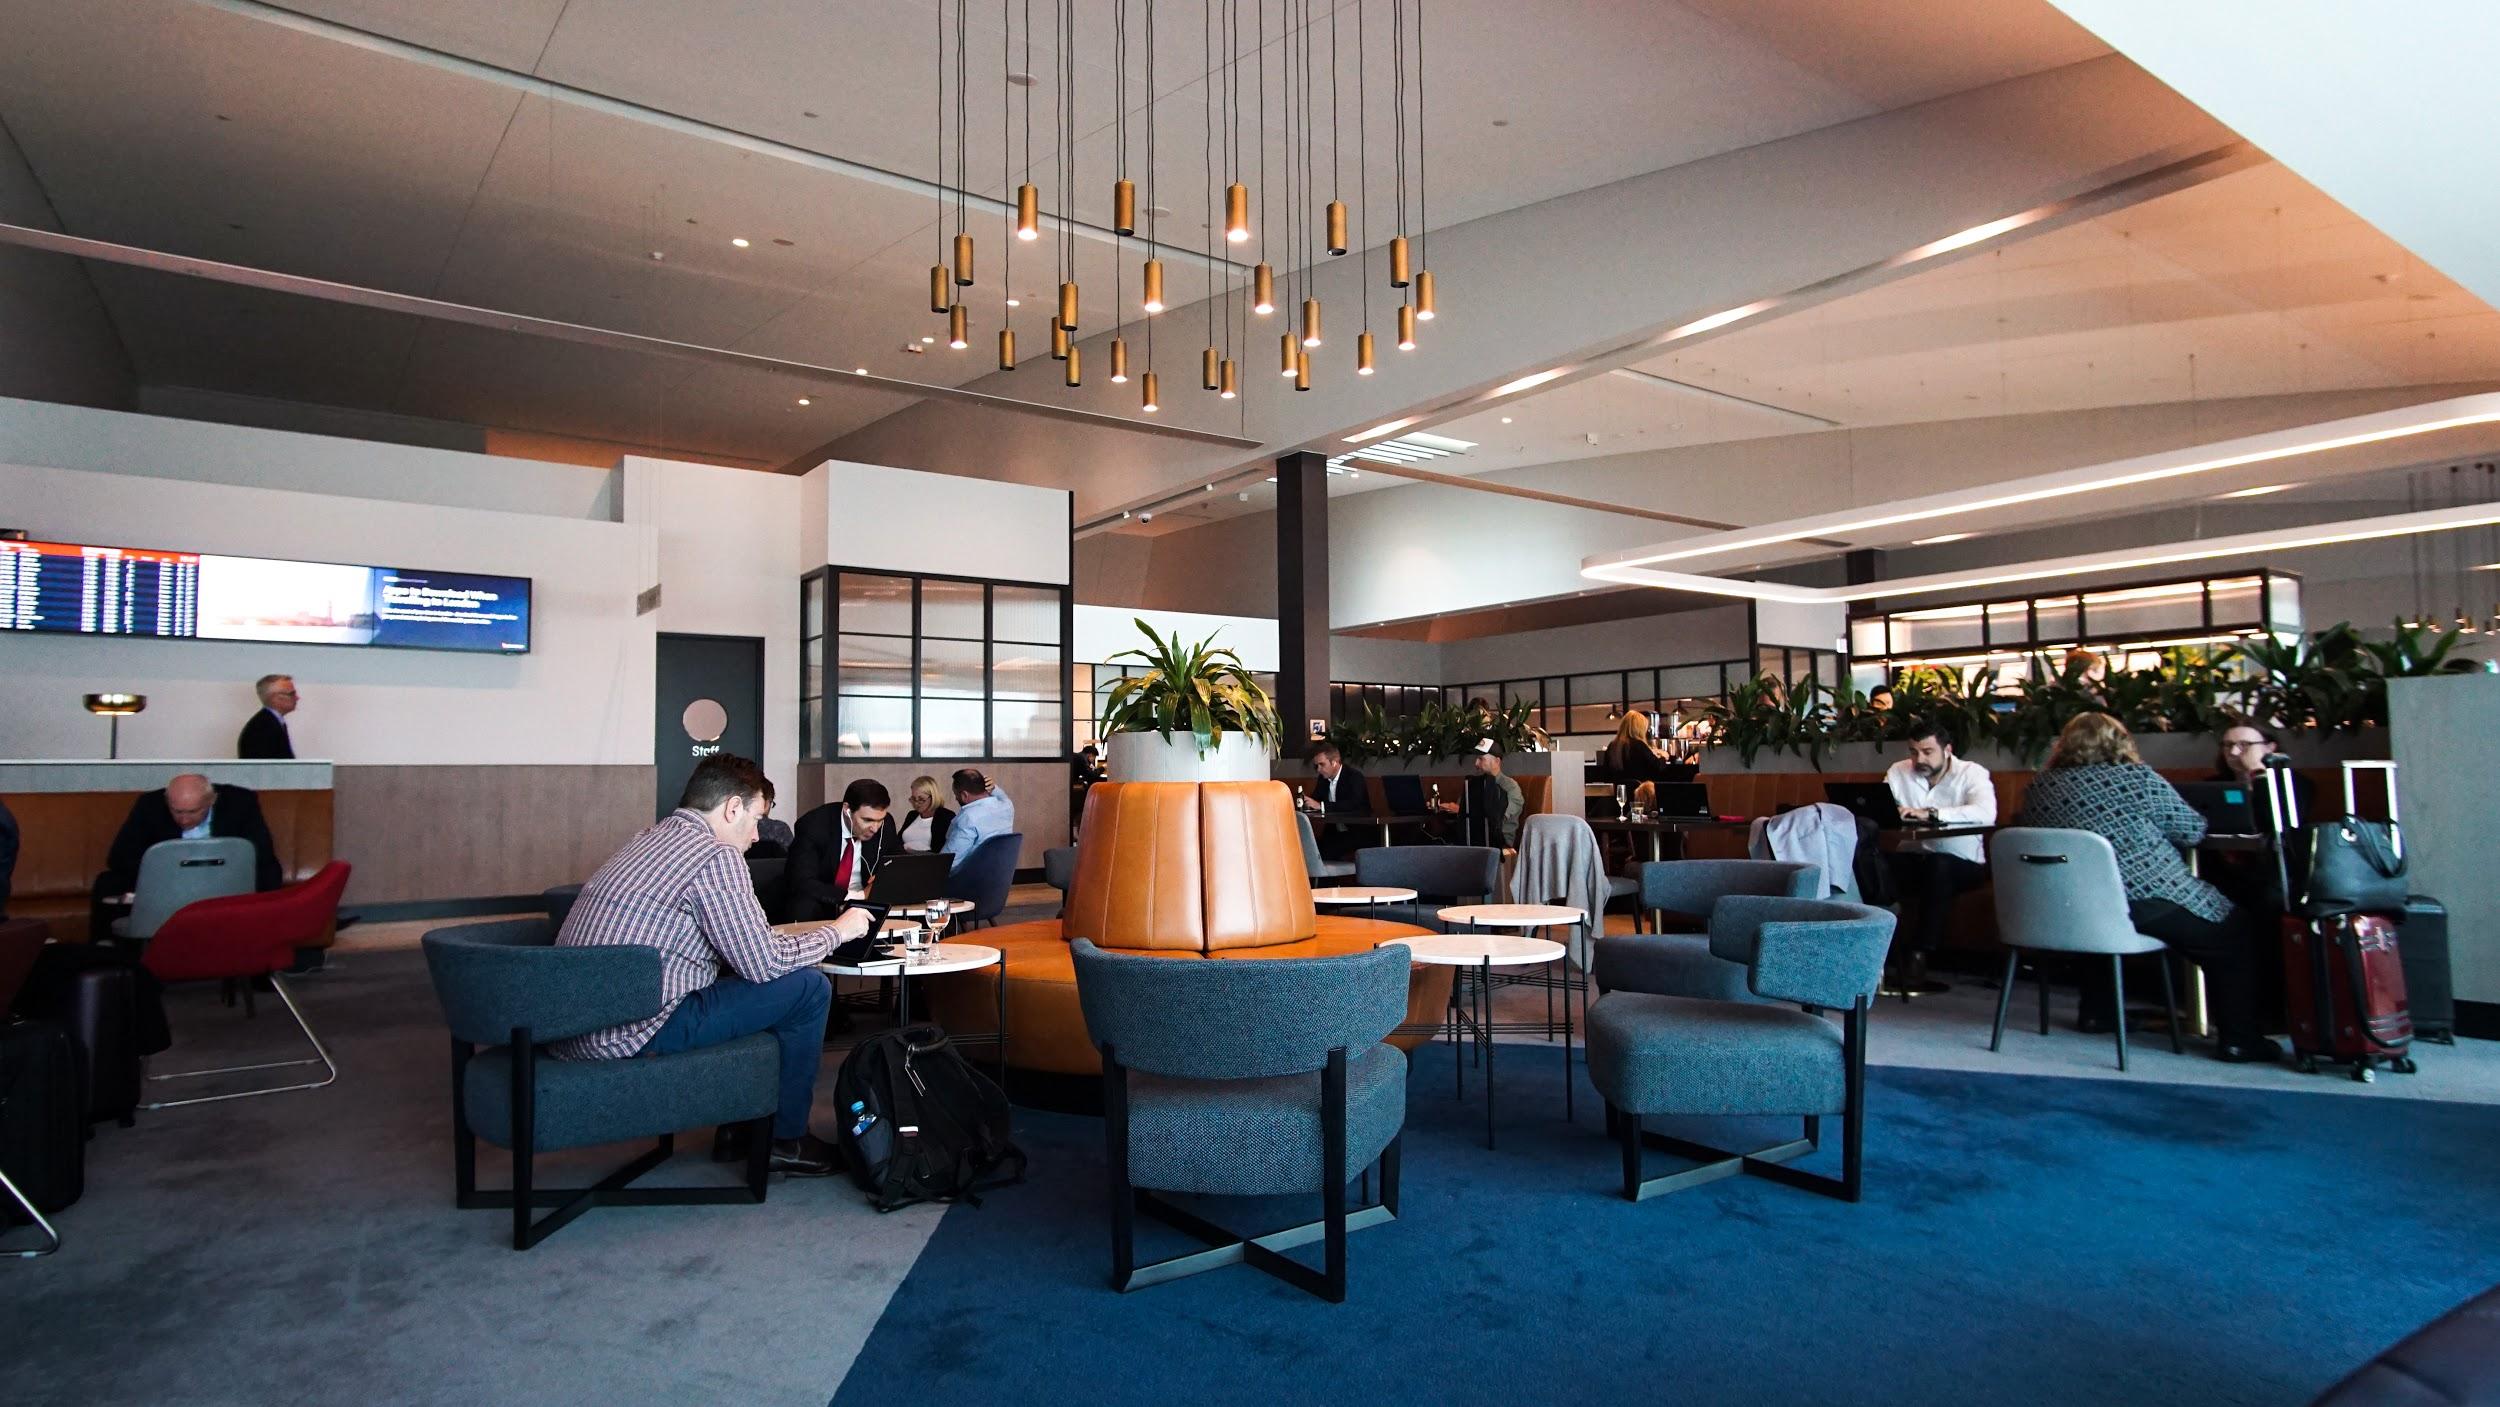 Qantas Domestic Business Lounge Melbourne seating area